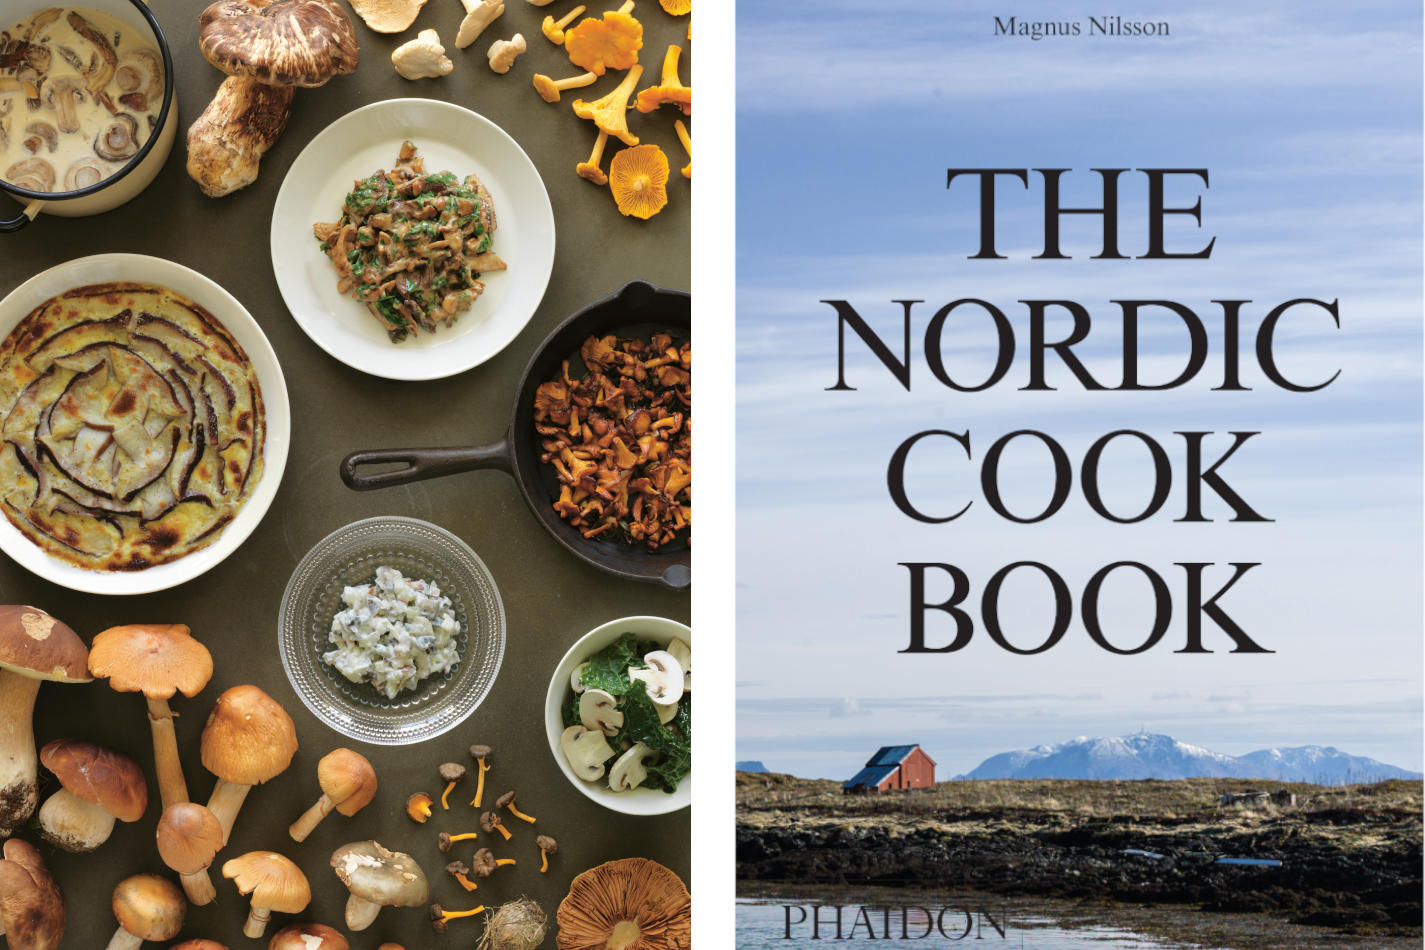 Magnus Nilsson | The Nordic Cookbook | Between candour and nostalgia | Scan Magazine